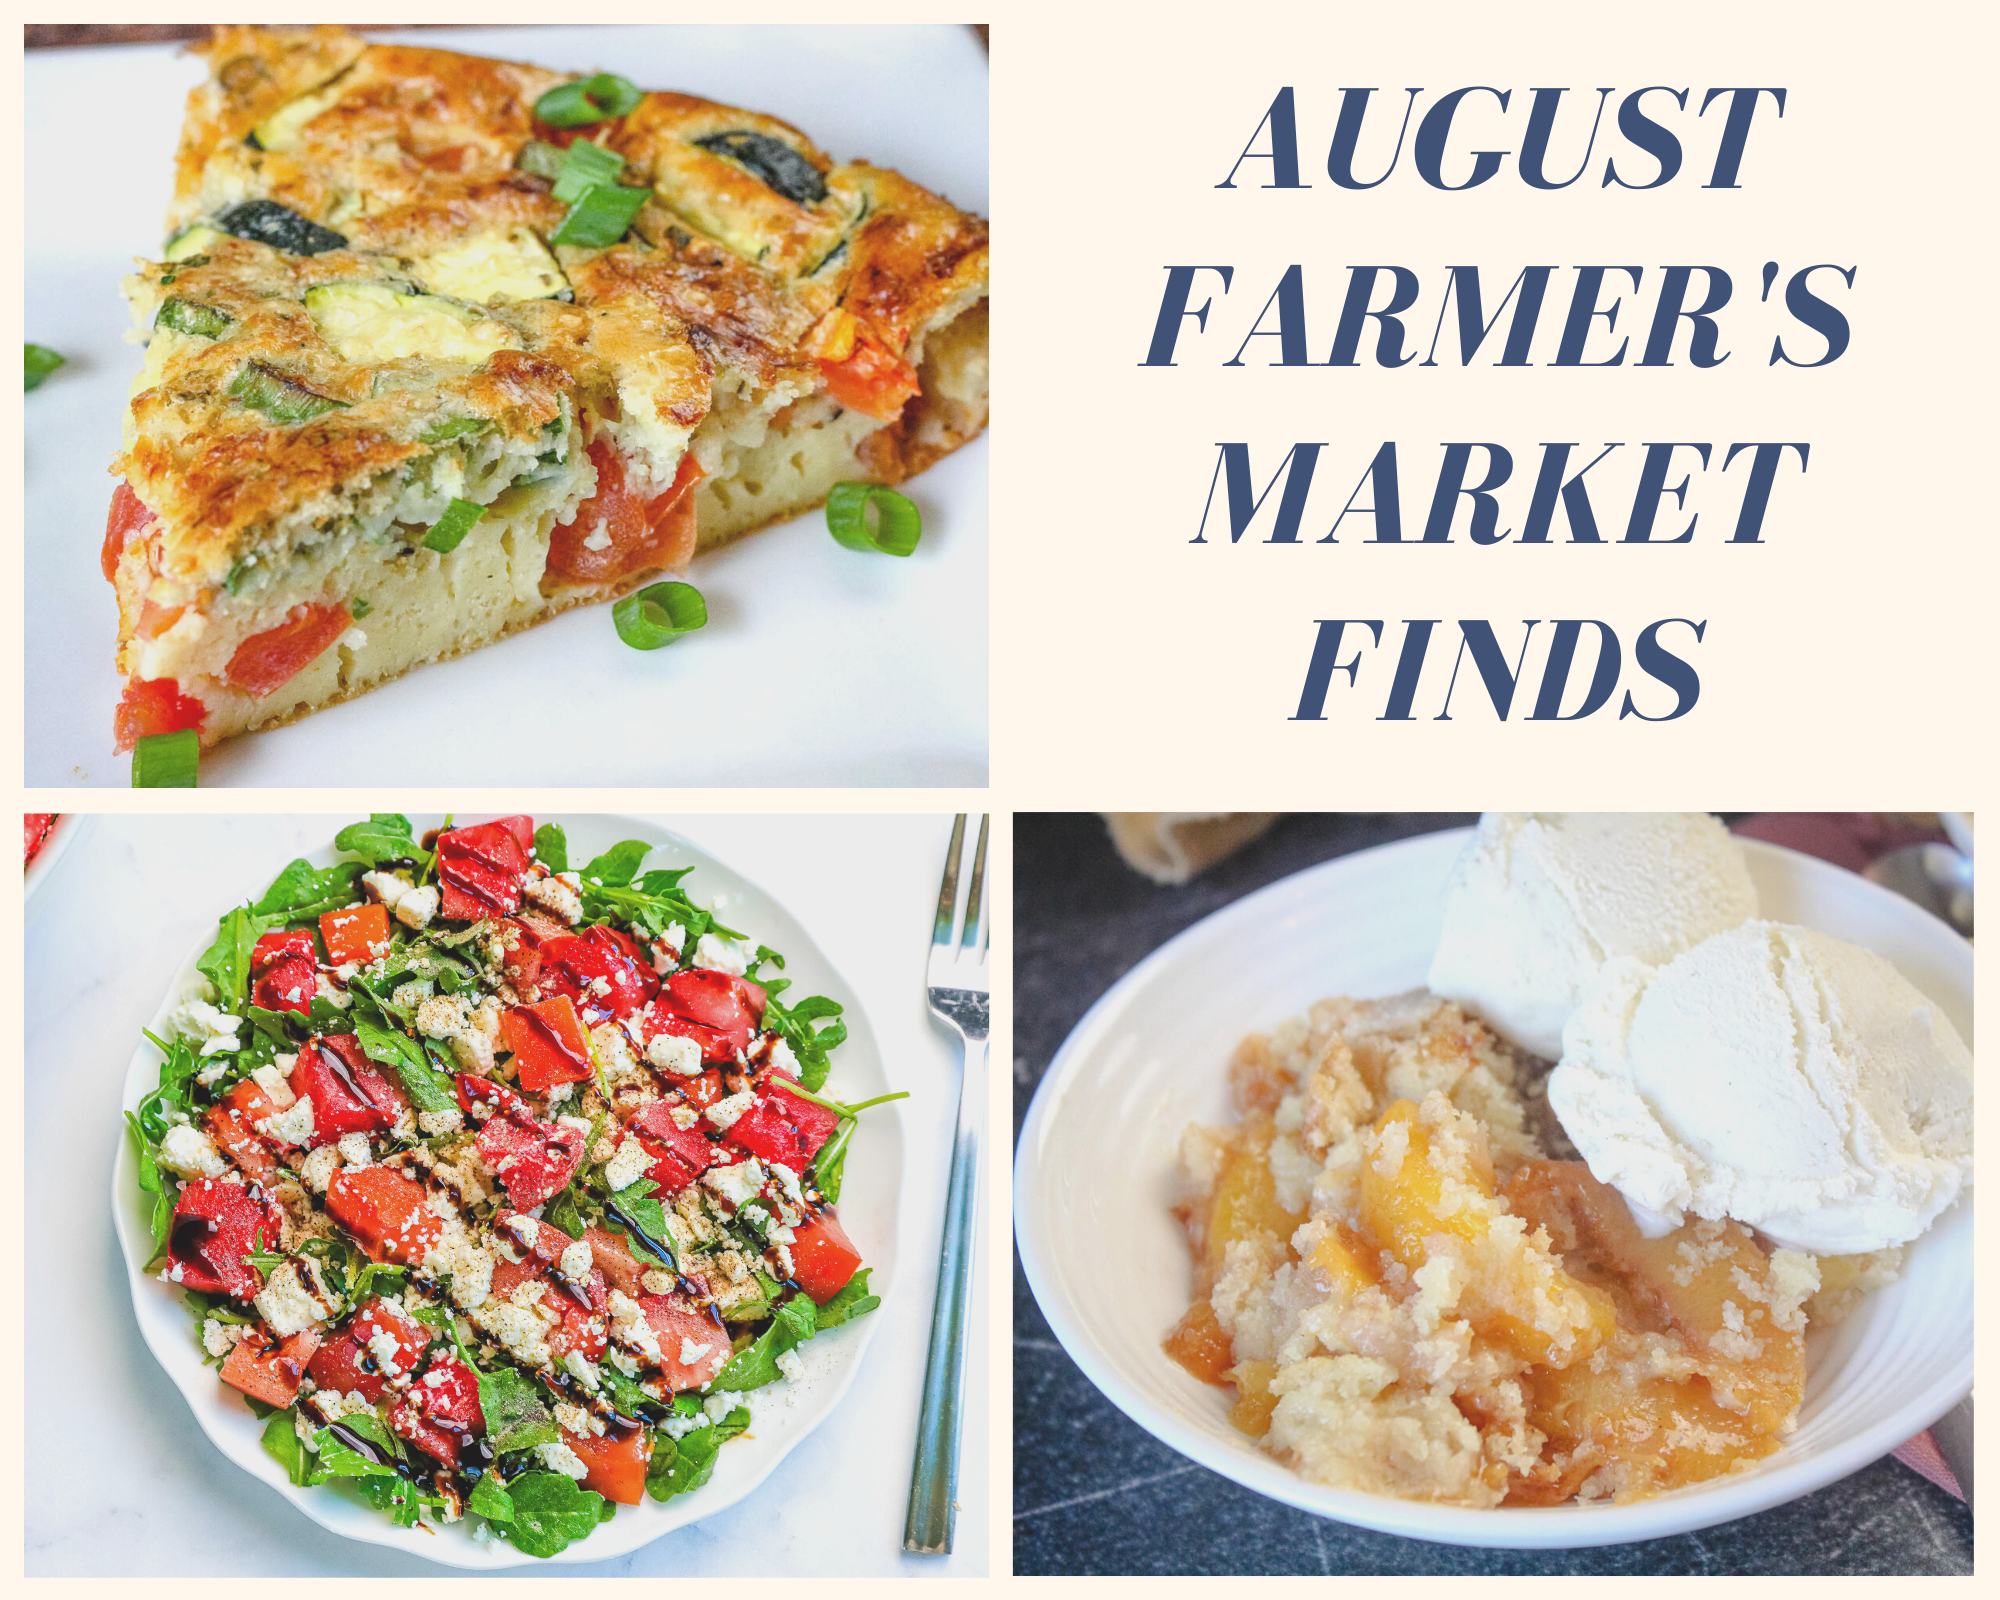 august farmer's market finds